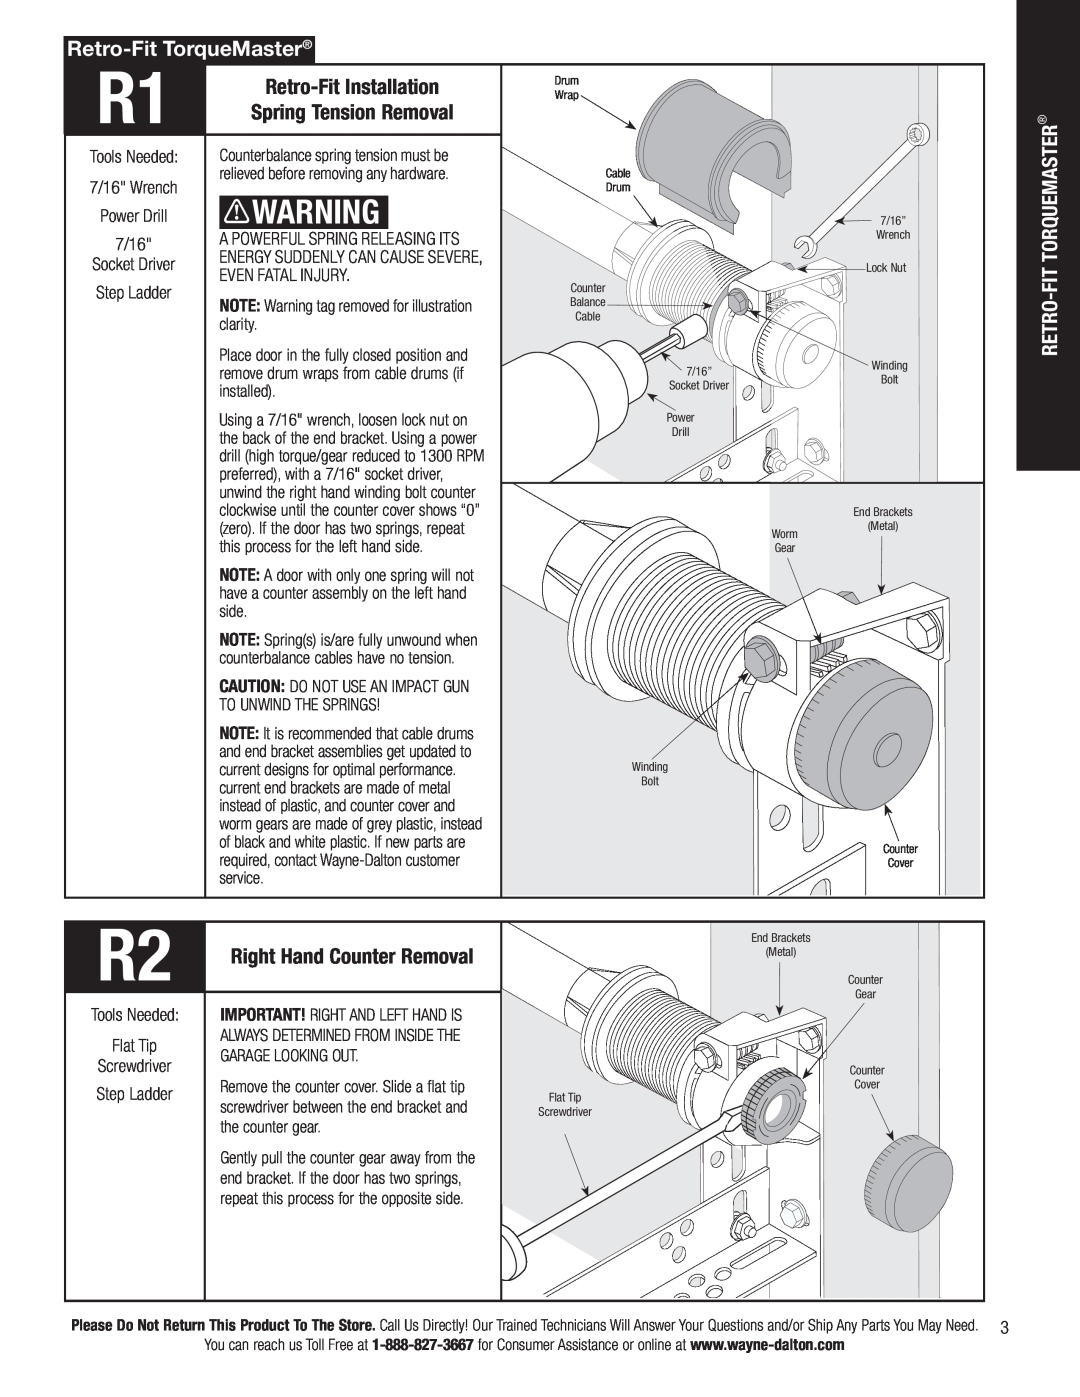 Wayne-Dalton 3790-Z installation instructions Retro-FitTorqueMaster, Retro-FitInstallation 